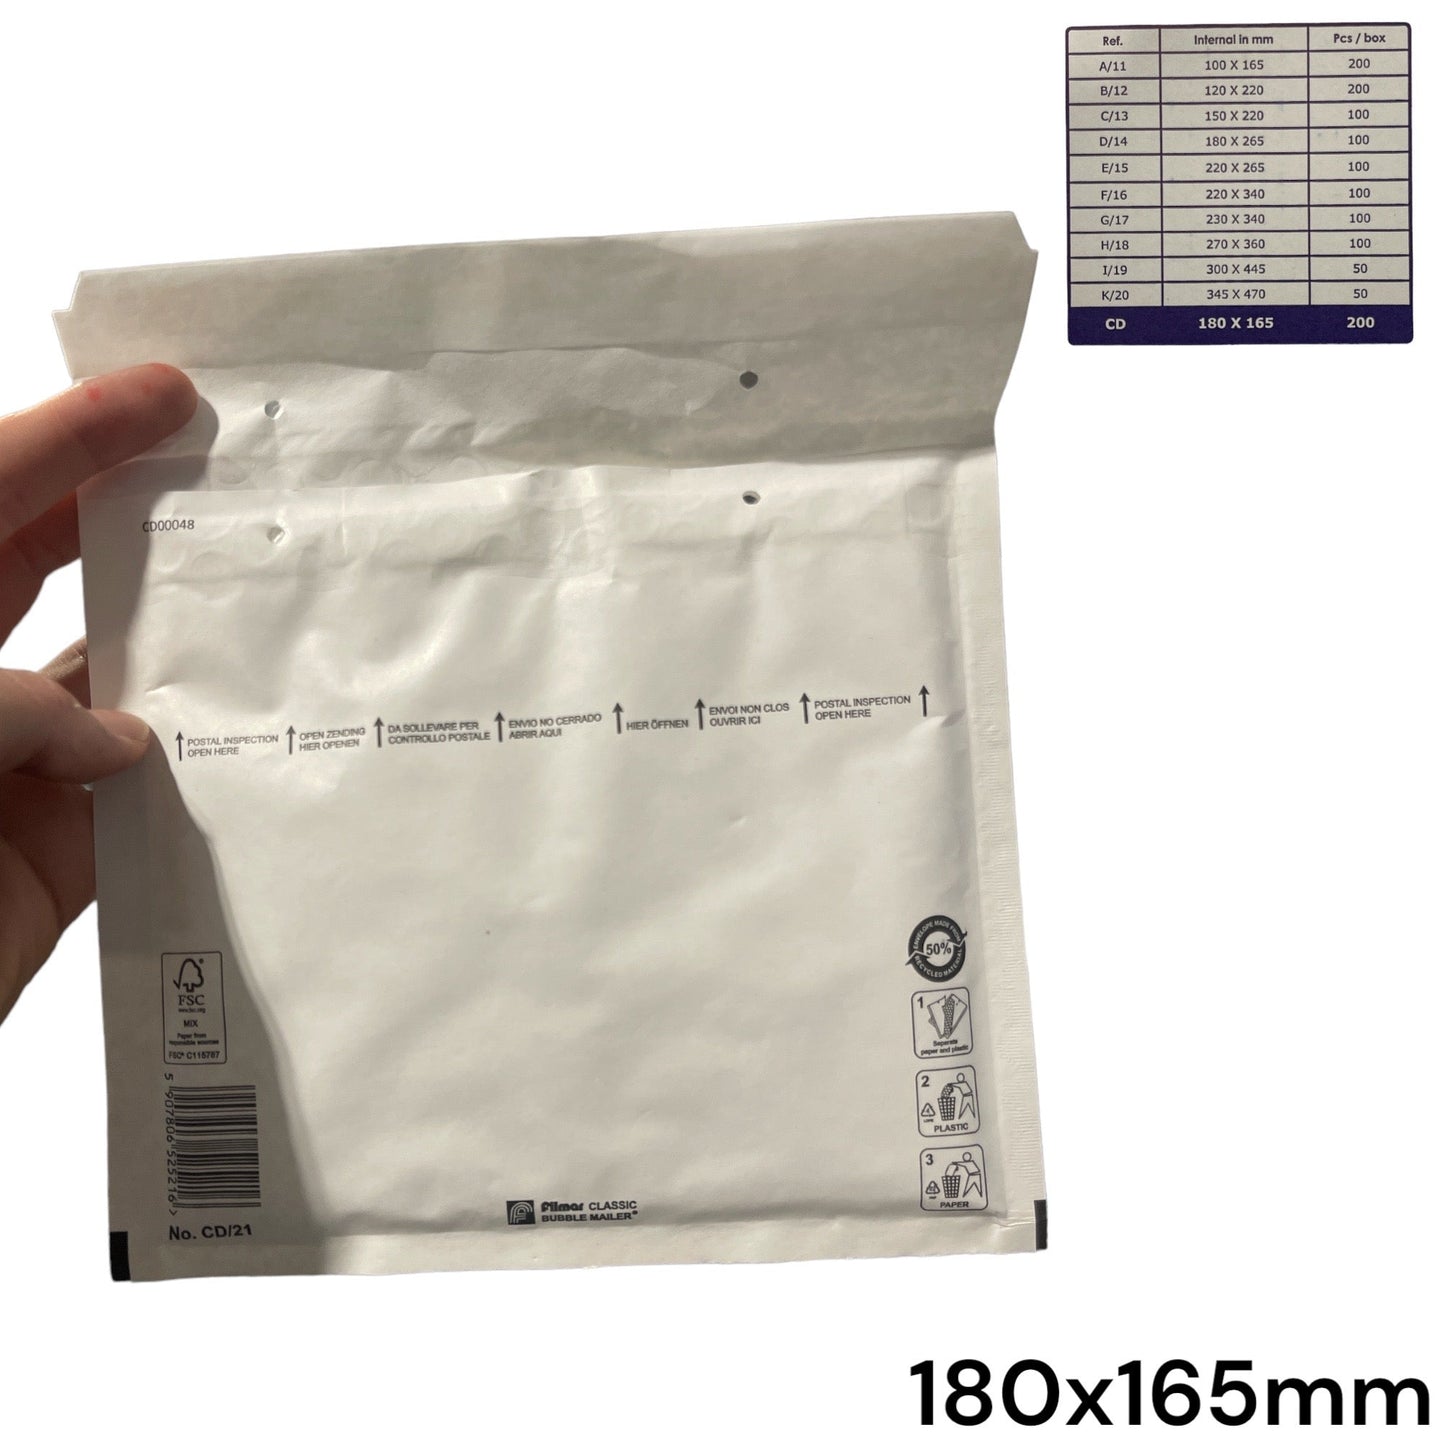 Timmy Toys - VD006 - CD Bubble Wrap Envelopes - 180x165mm - 200 Pieces